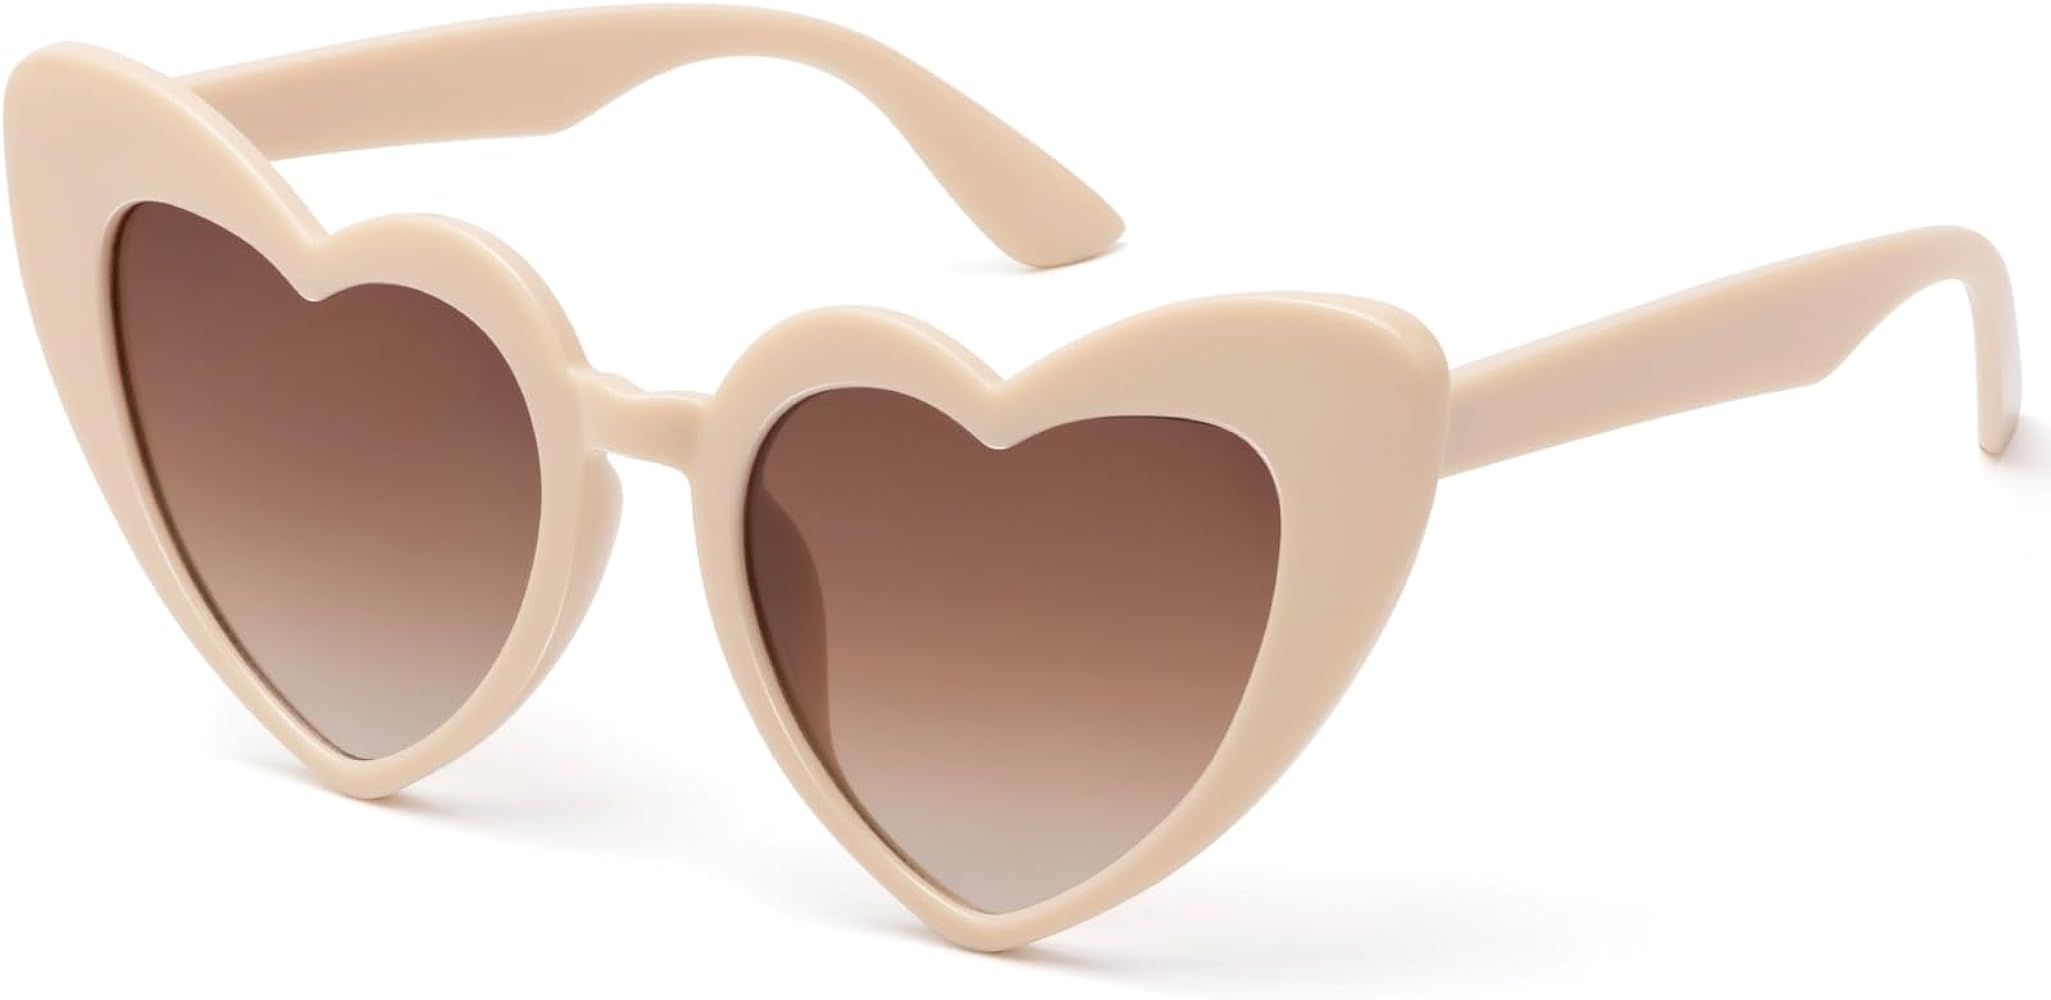 LIKSMU Heart Sunglasses for Women Trendy Cat Eye Love Shaped Sunglasses Vintage Lovely Retro Cute... | Amazon (US)